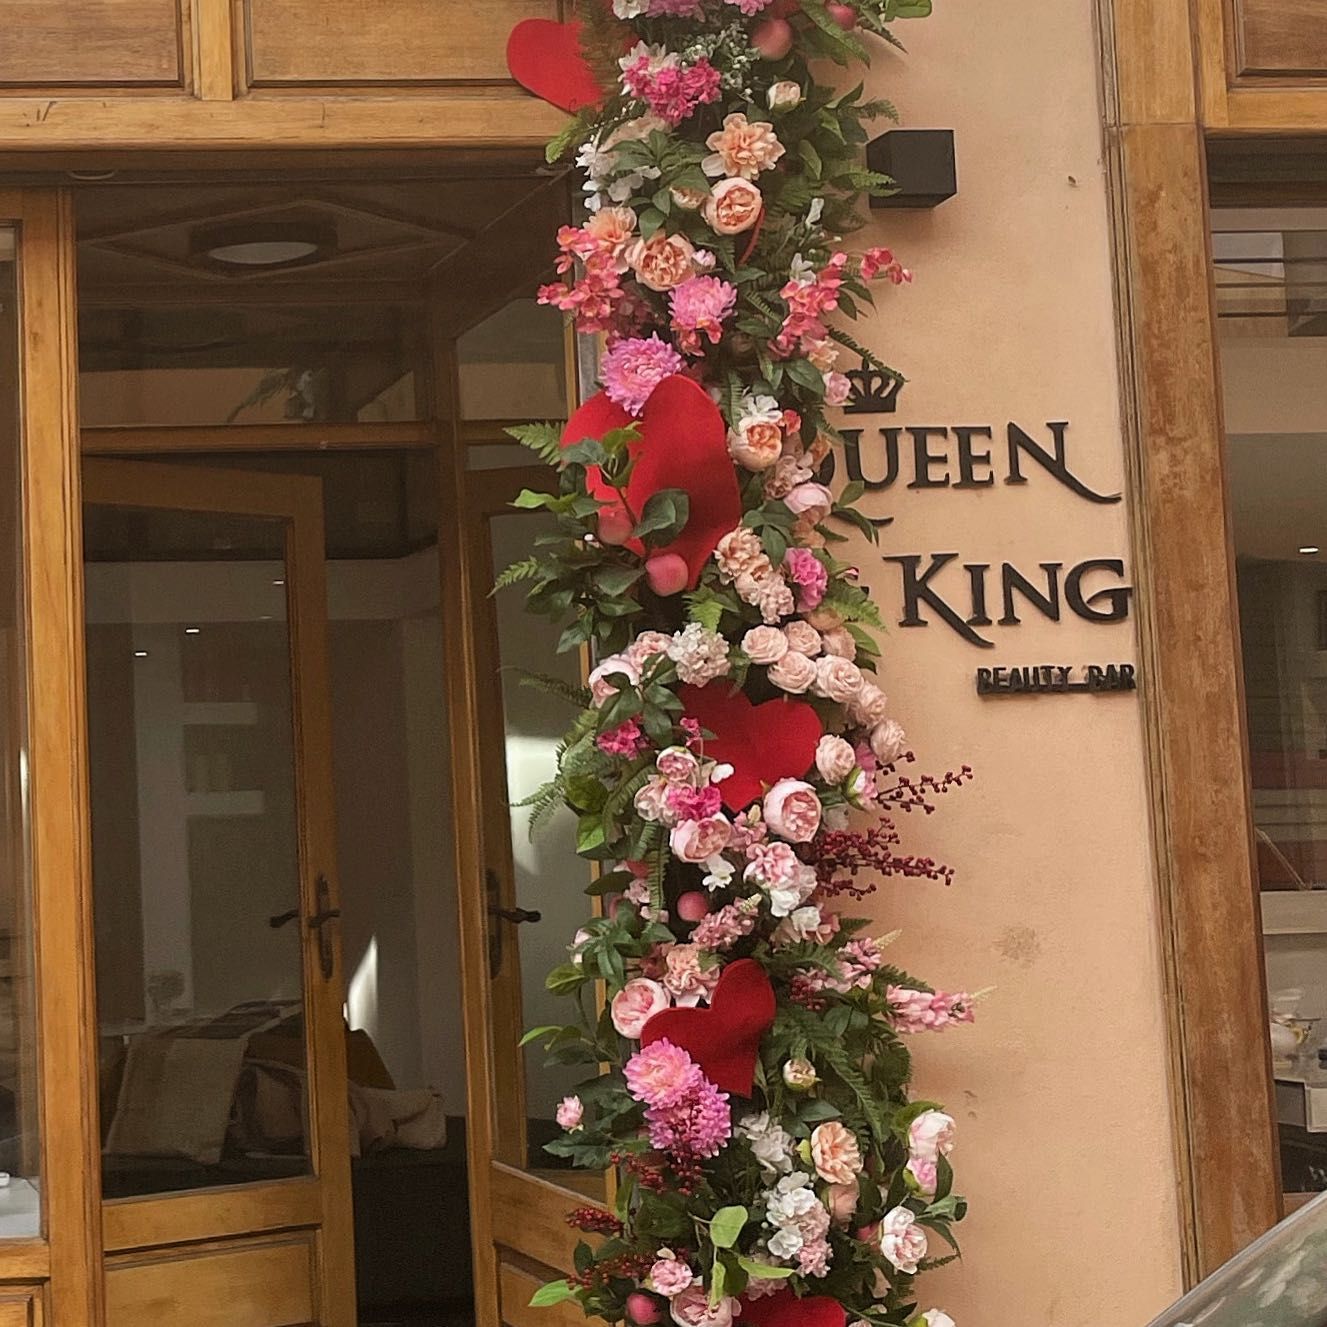 La Maison de Beauté Queen and King, 37 Rue César Campinchi, 20200, Bastia